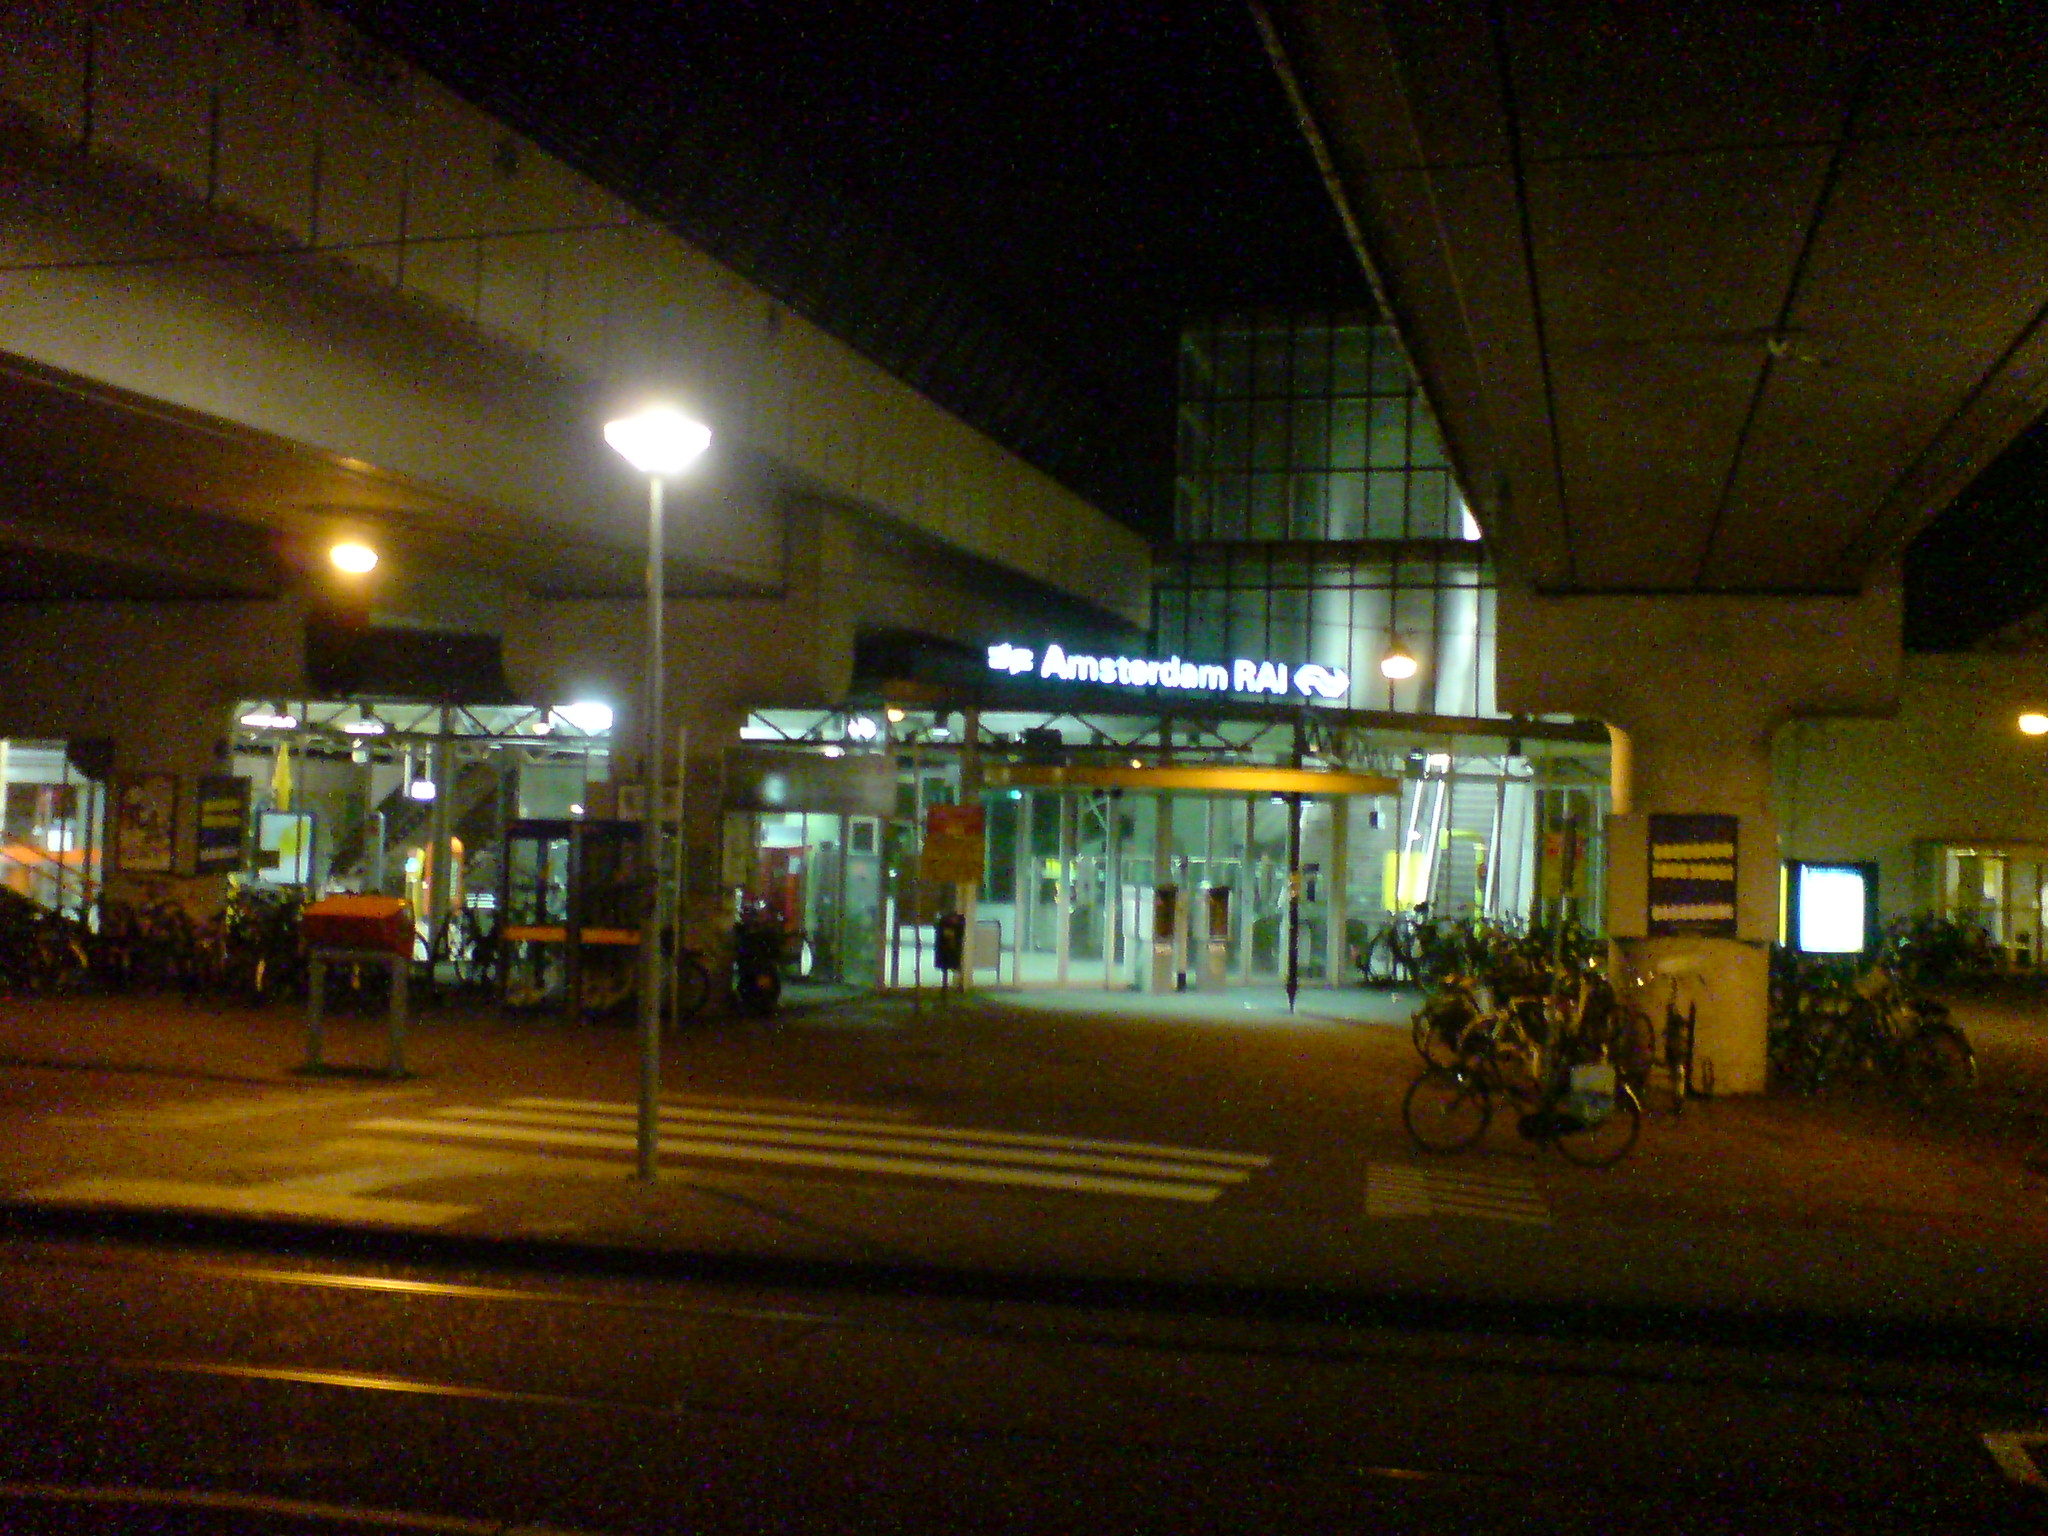 Amsterdam RAI bij nacht